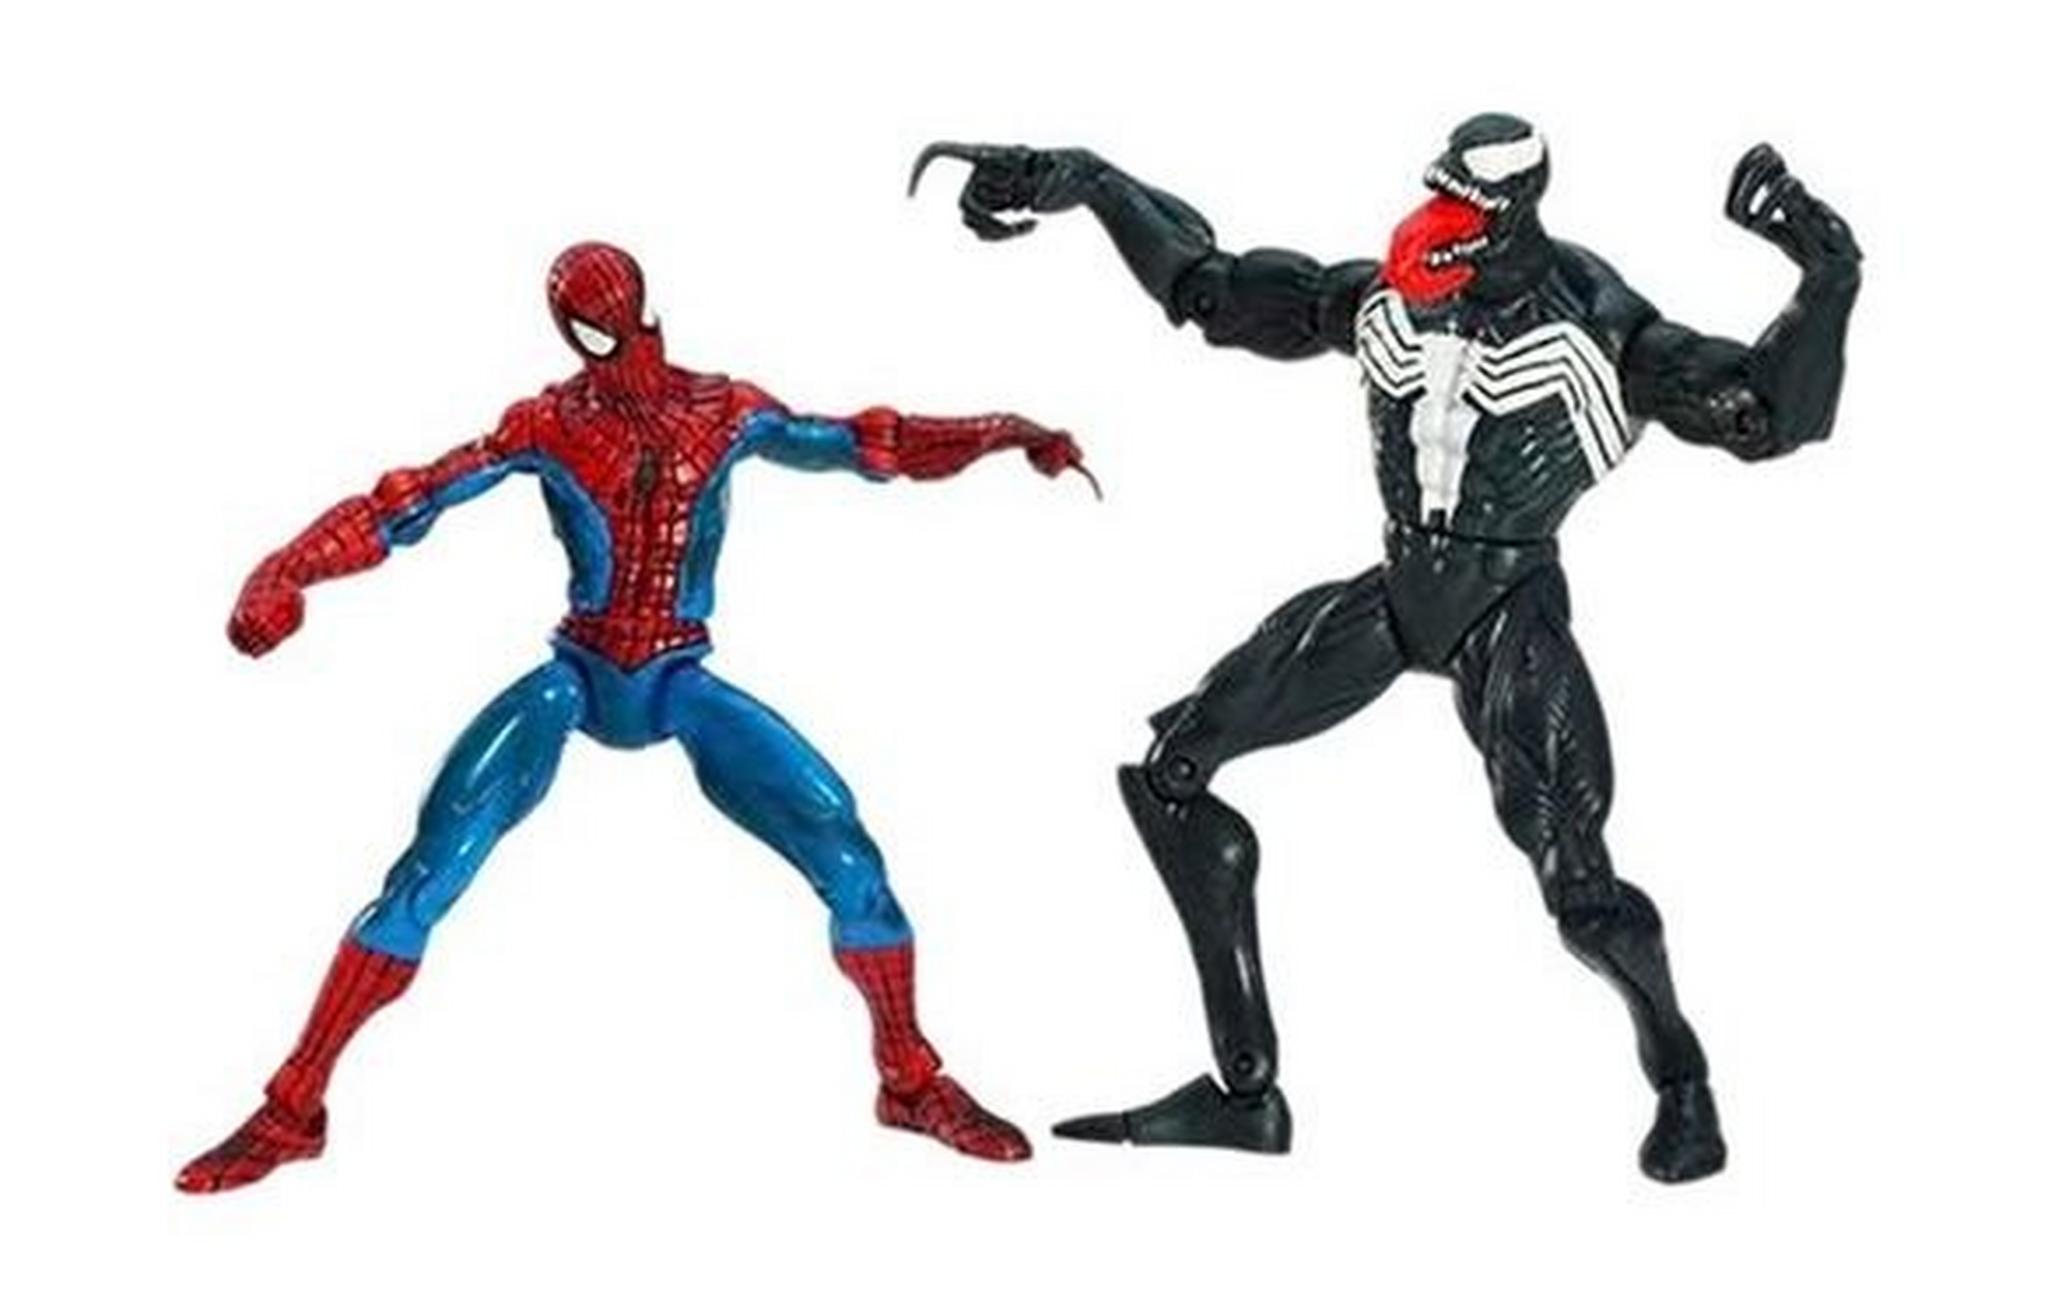 Hasbro Spider-Man Origins Battle Packs: Spider-Man vs. Venom Action Figure